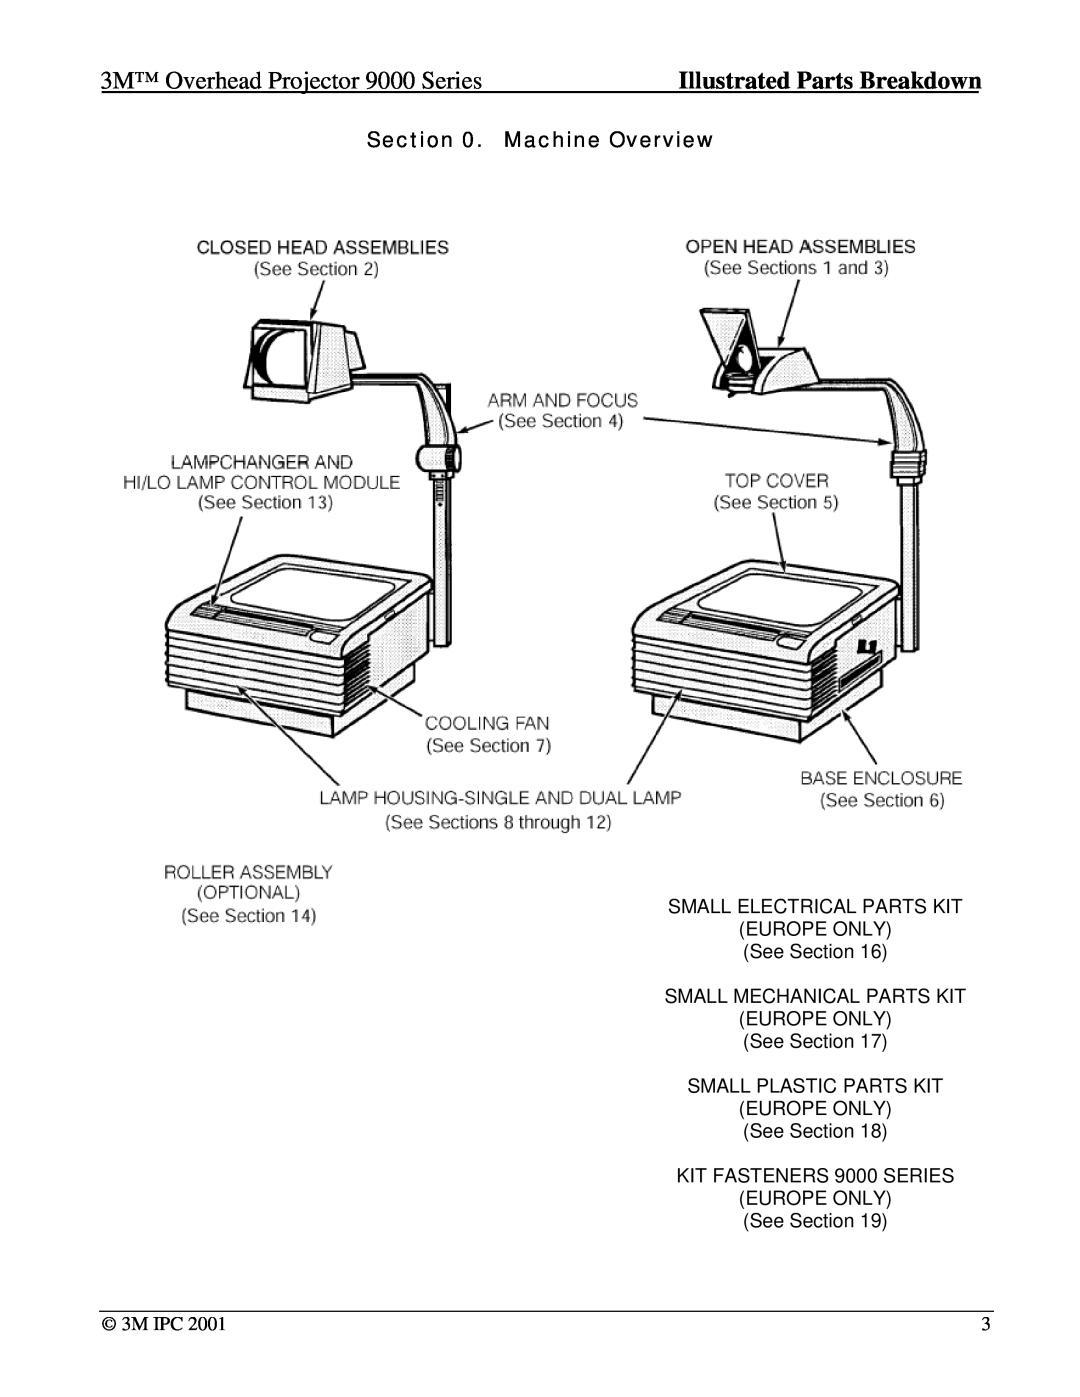 Xerox 9100, 9550, 9075, 9080, 9076 3M Overhead Projector 9000 Series, Machine Overview, Illustrated Parts Breakdown, 3M IPC 